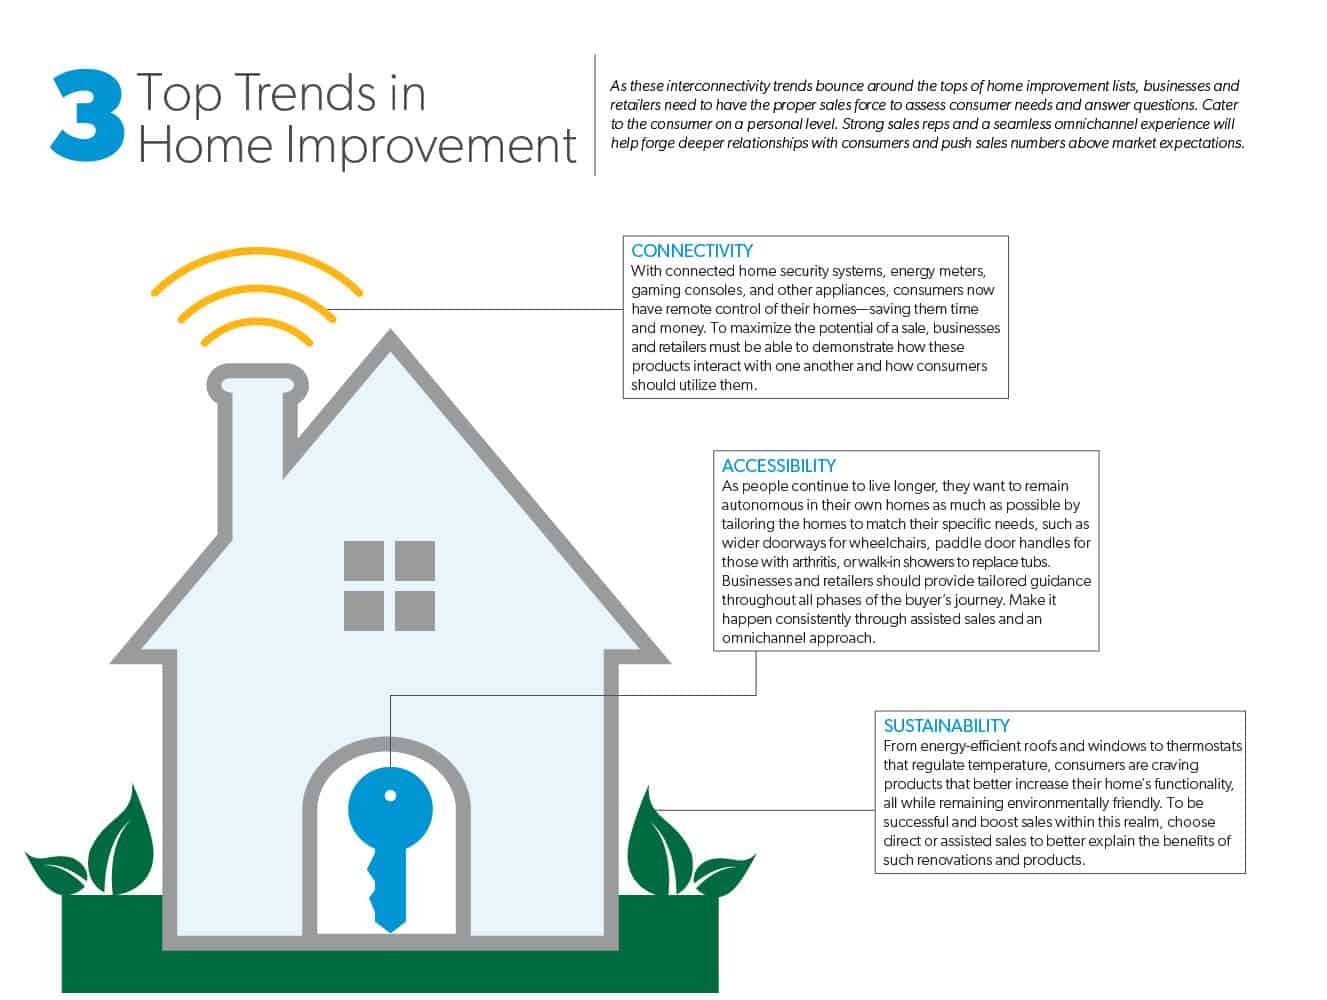 Interconnectivity: Trends in Home Improvement